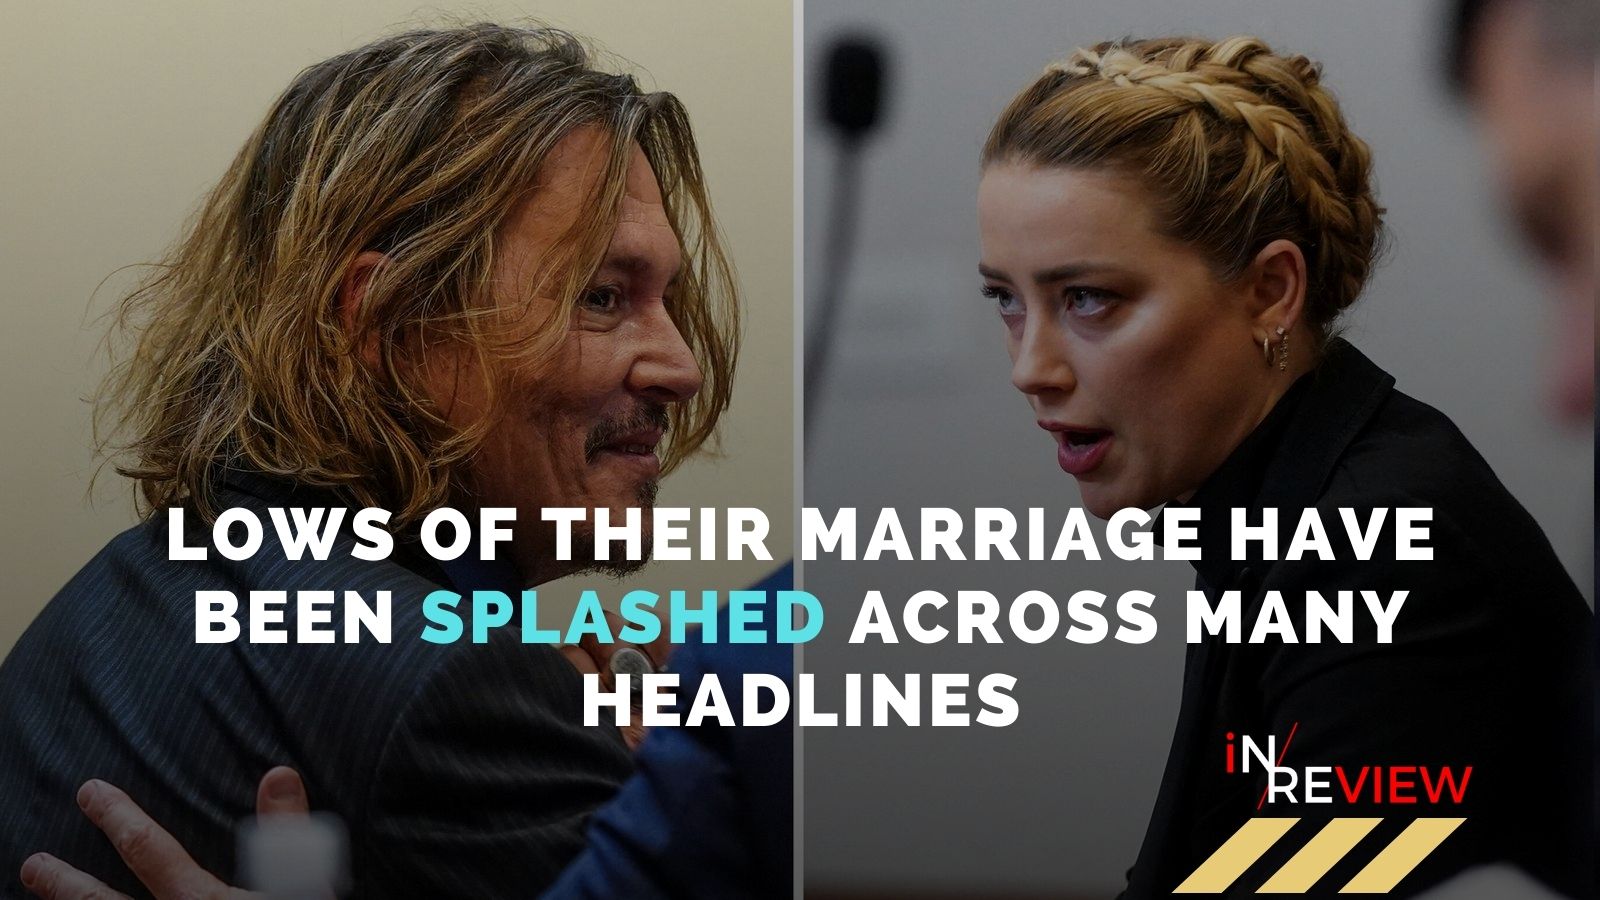 Inside the $100m Johnny Depp trial - Johnny Depp Amber Heard trial